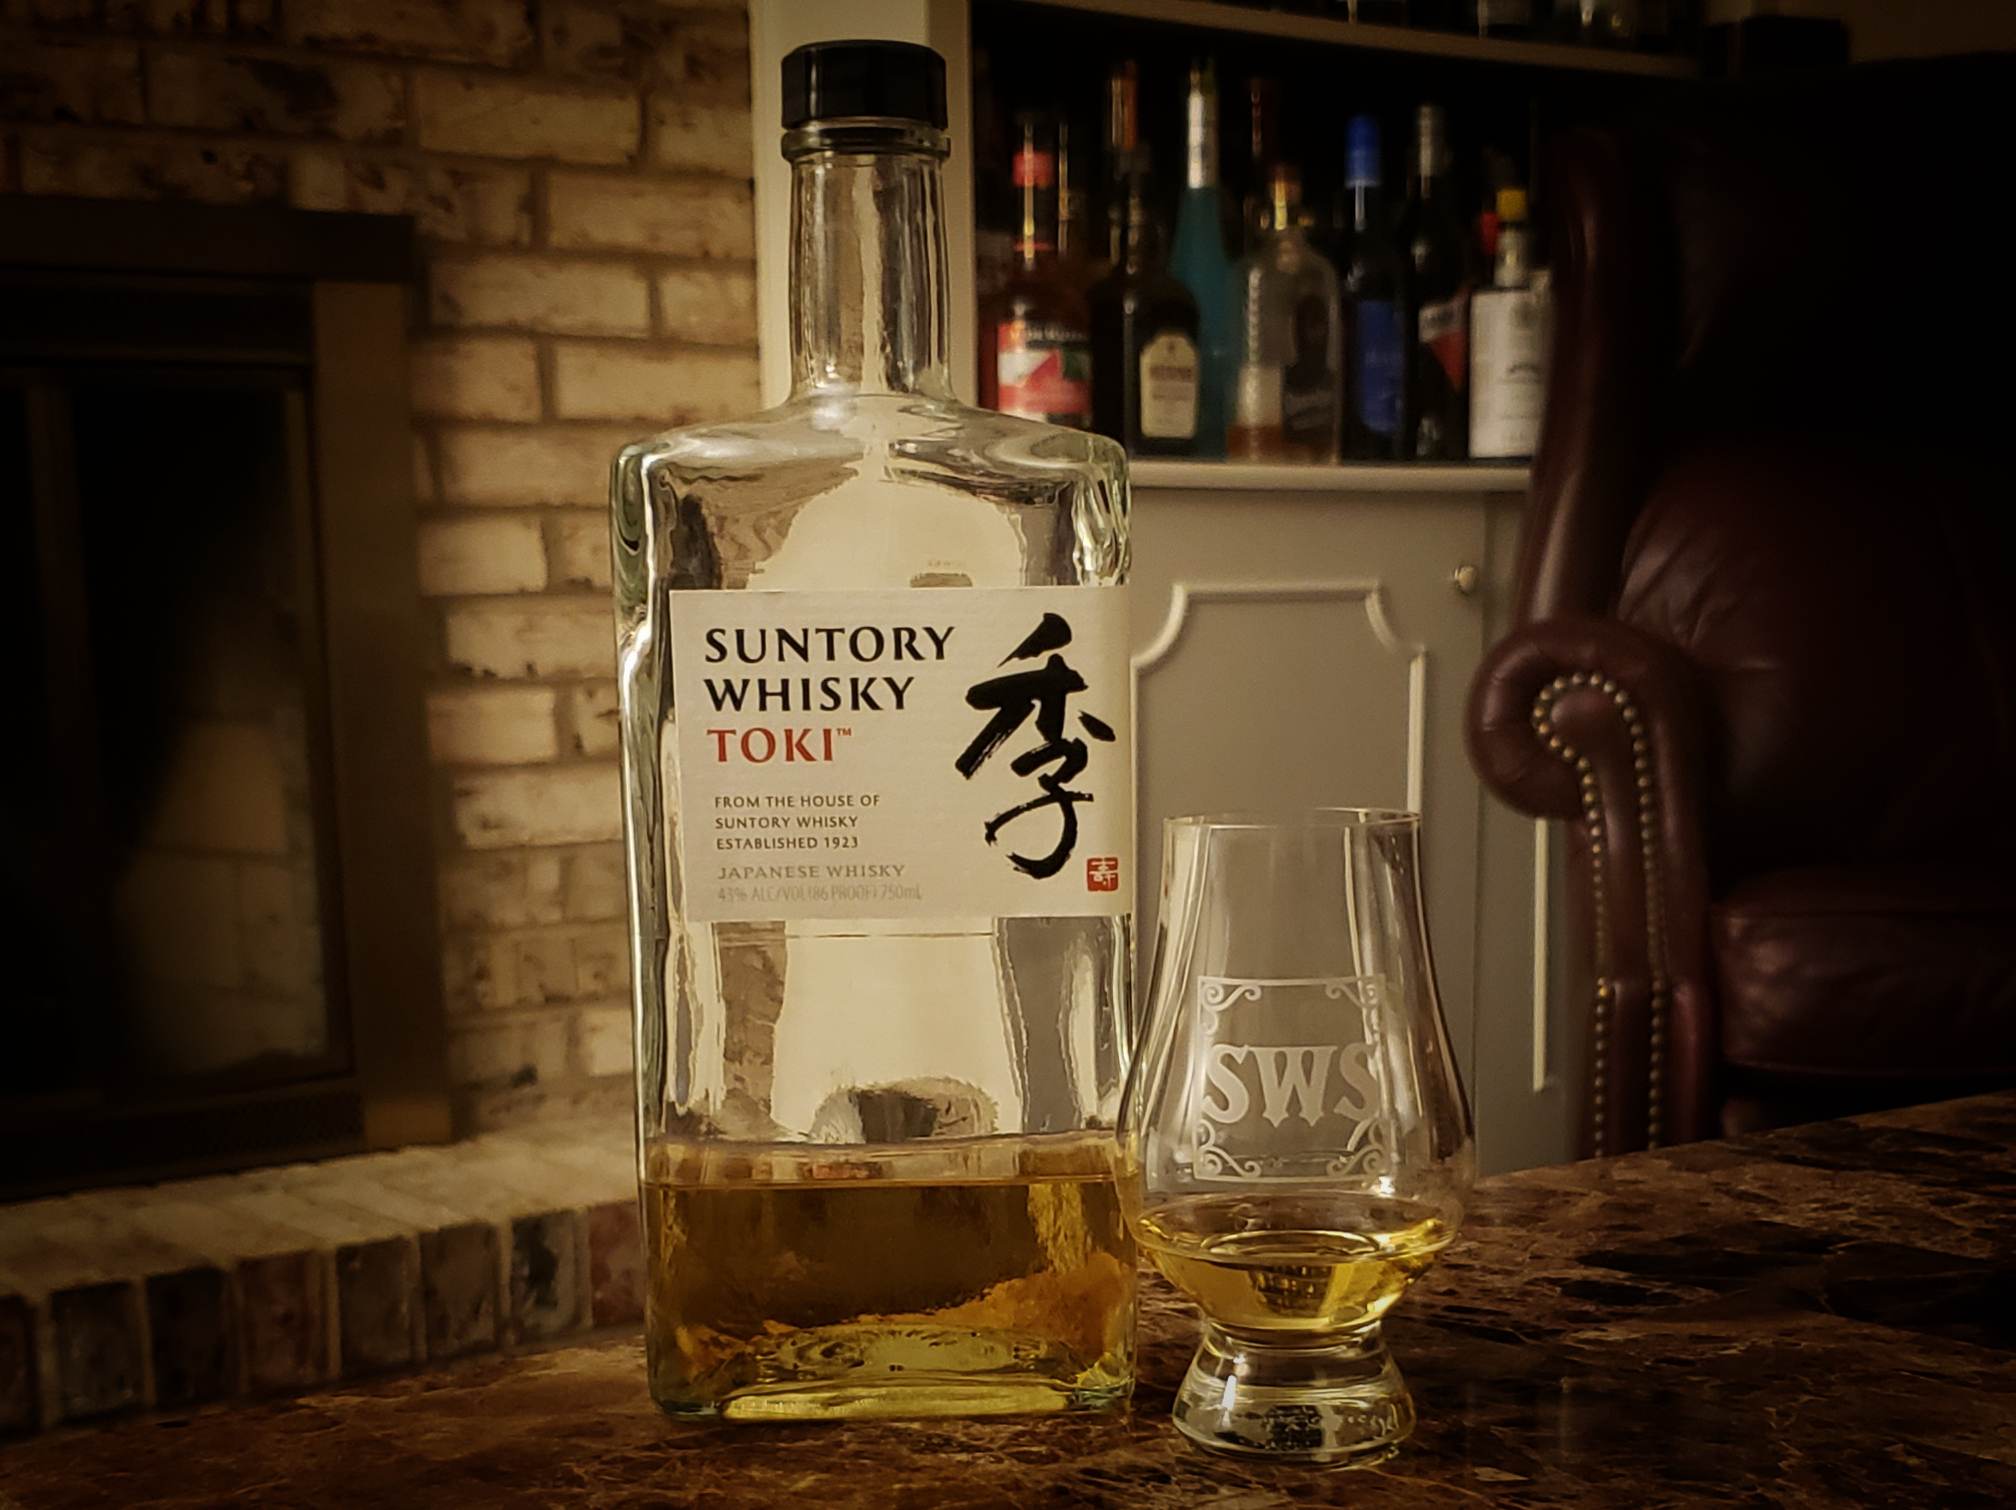 Suntory - Whisky japonais - Toki